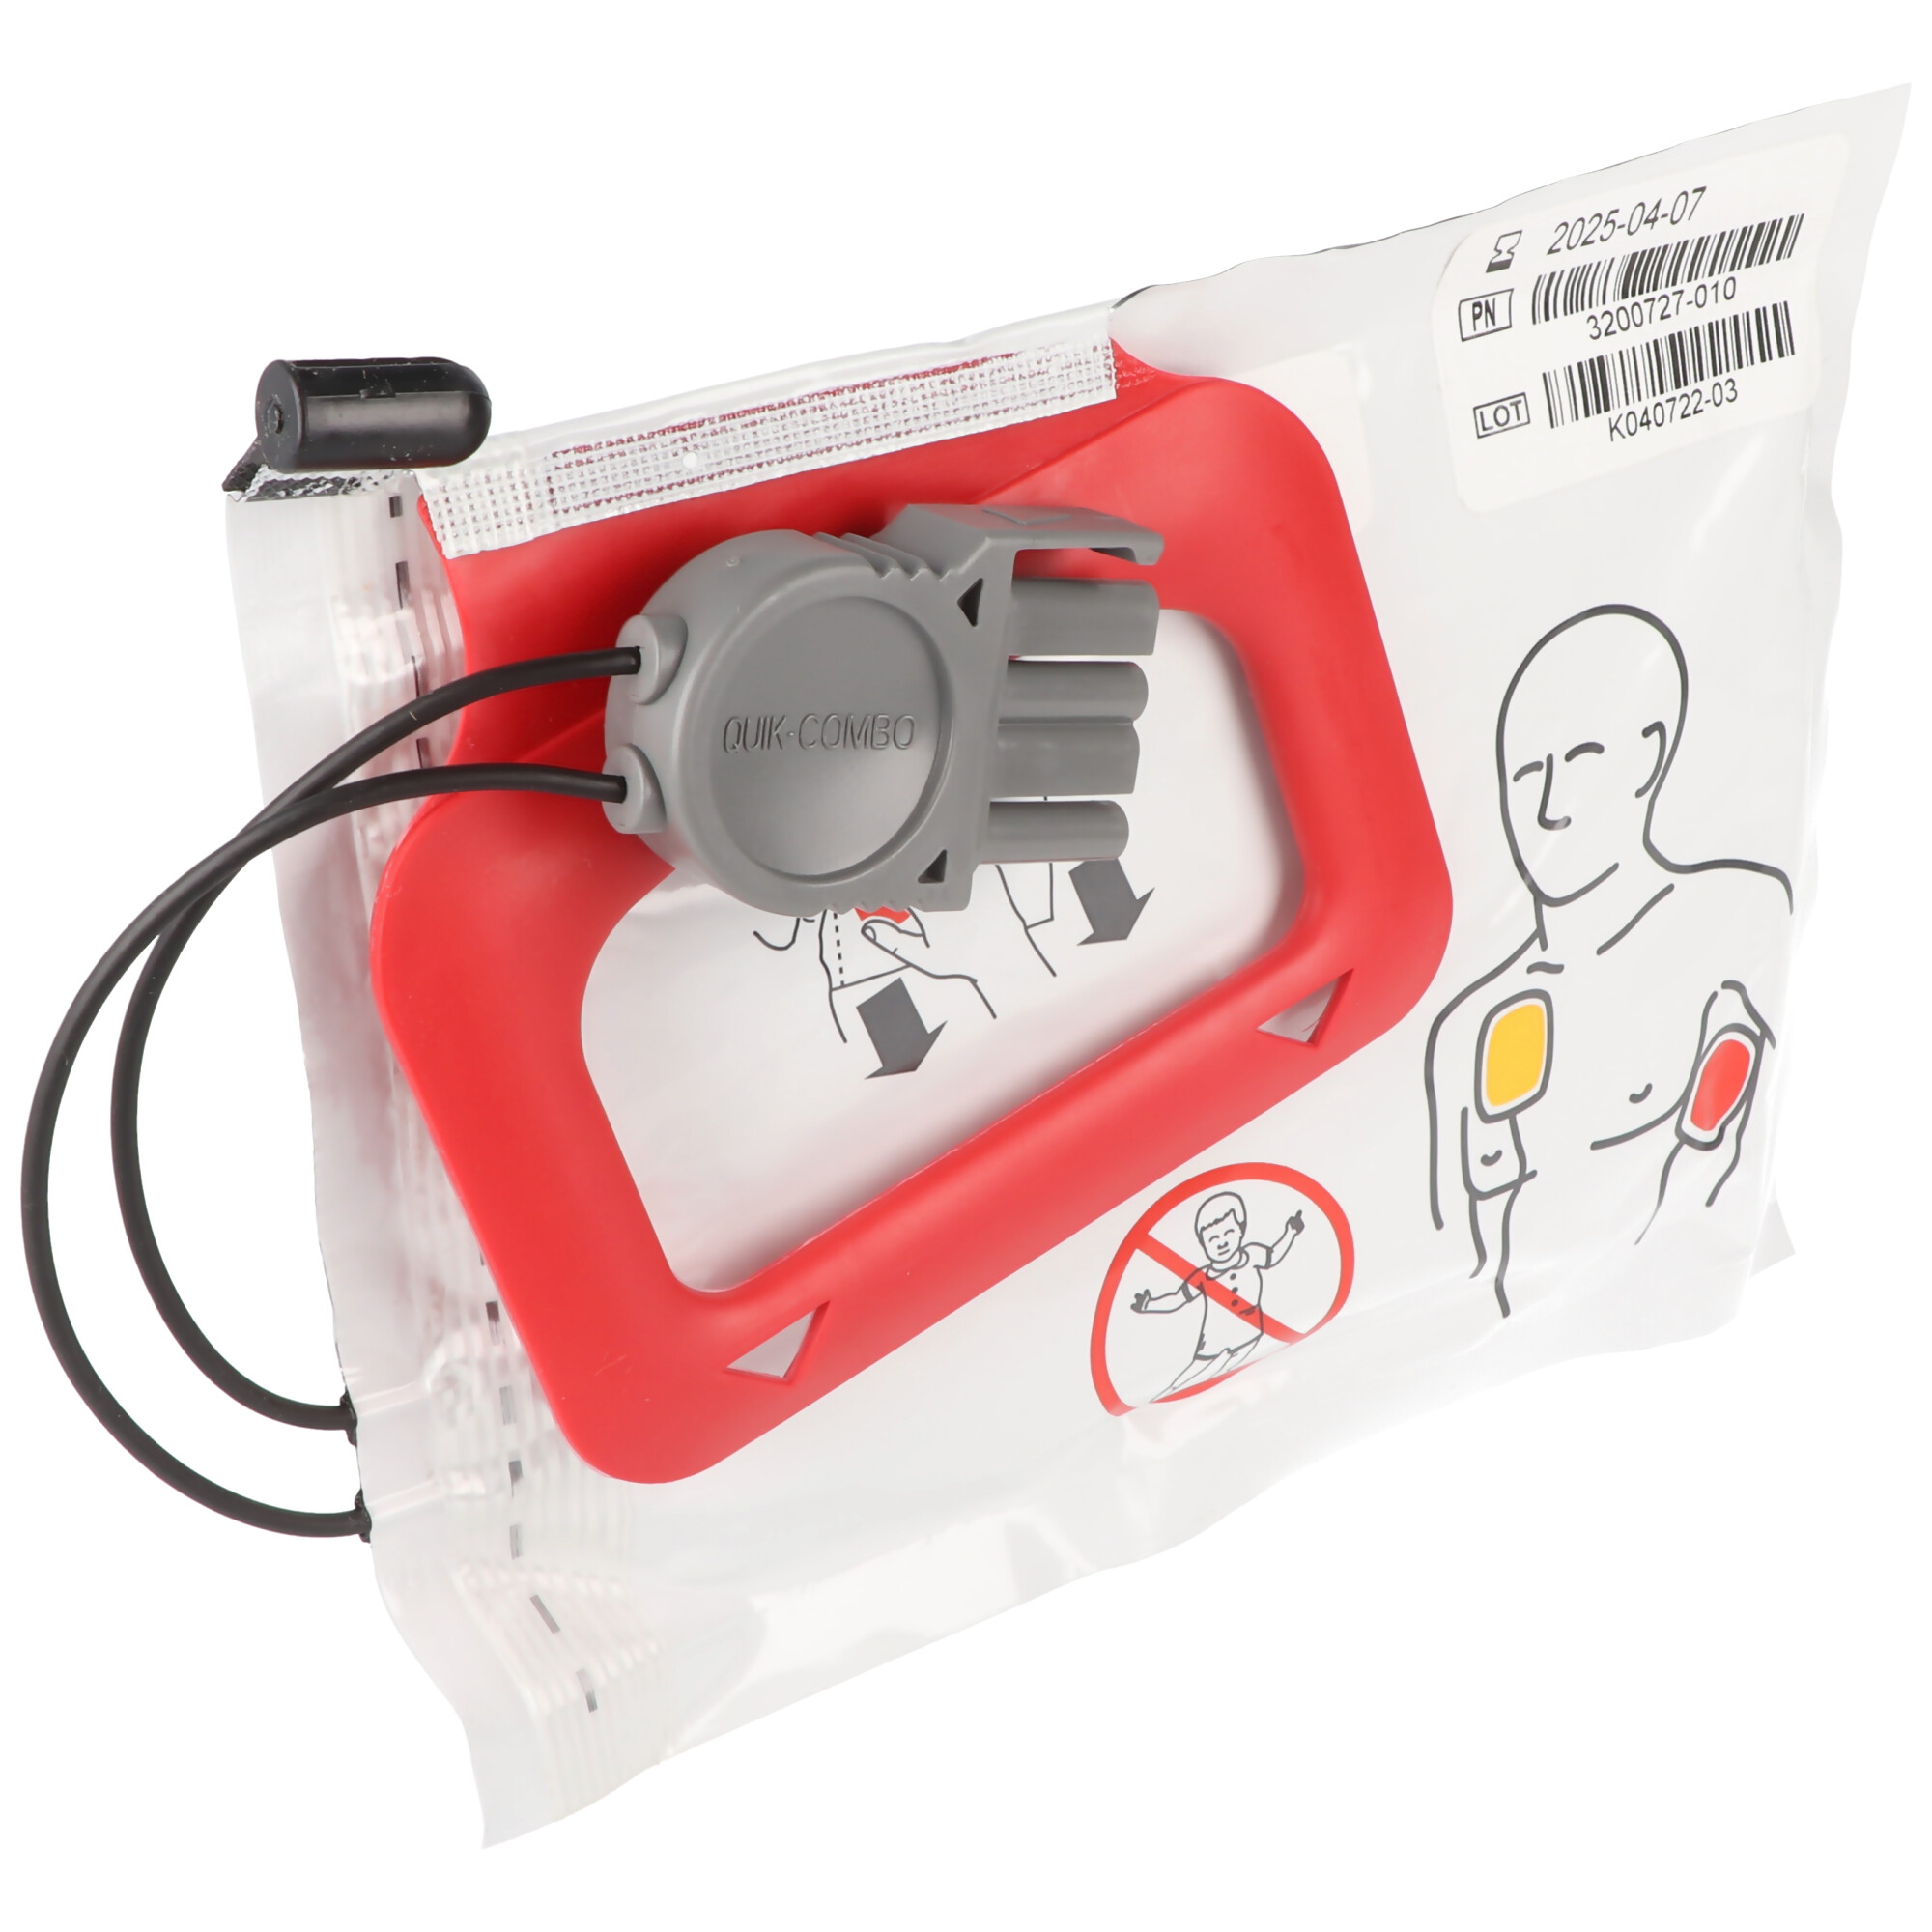 2 Stück Original Lithiumbatterie Physio Control Defibrillator Lifepak CR Plus/ Express - 11403-000001